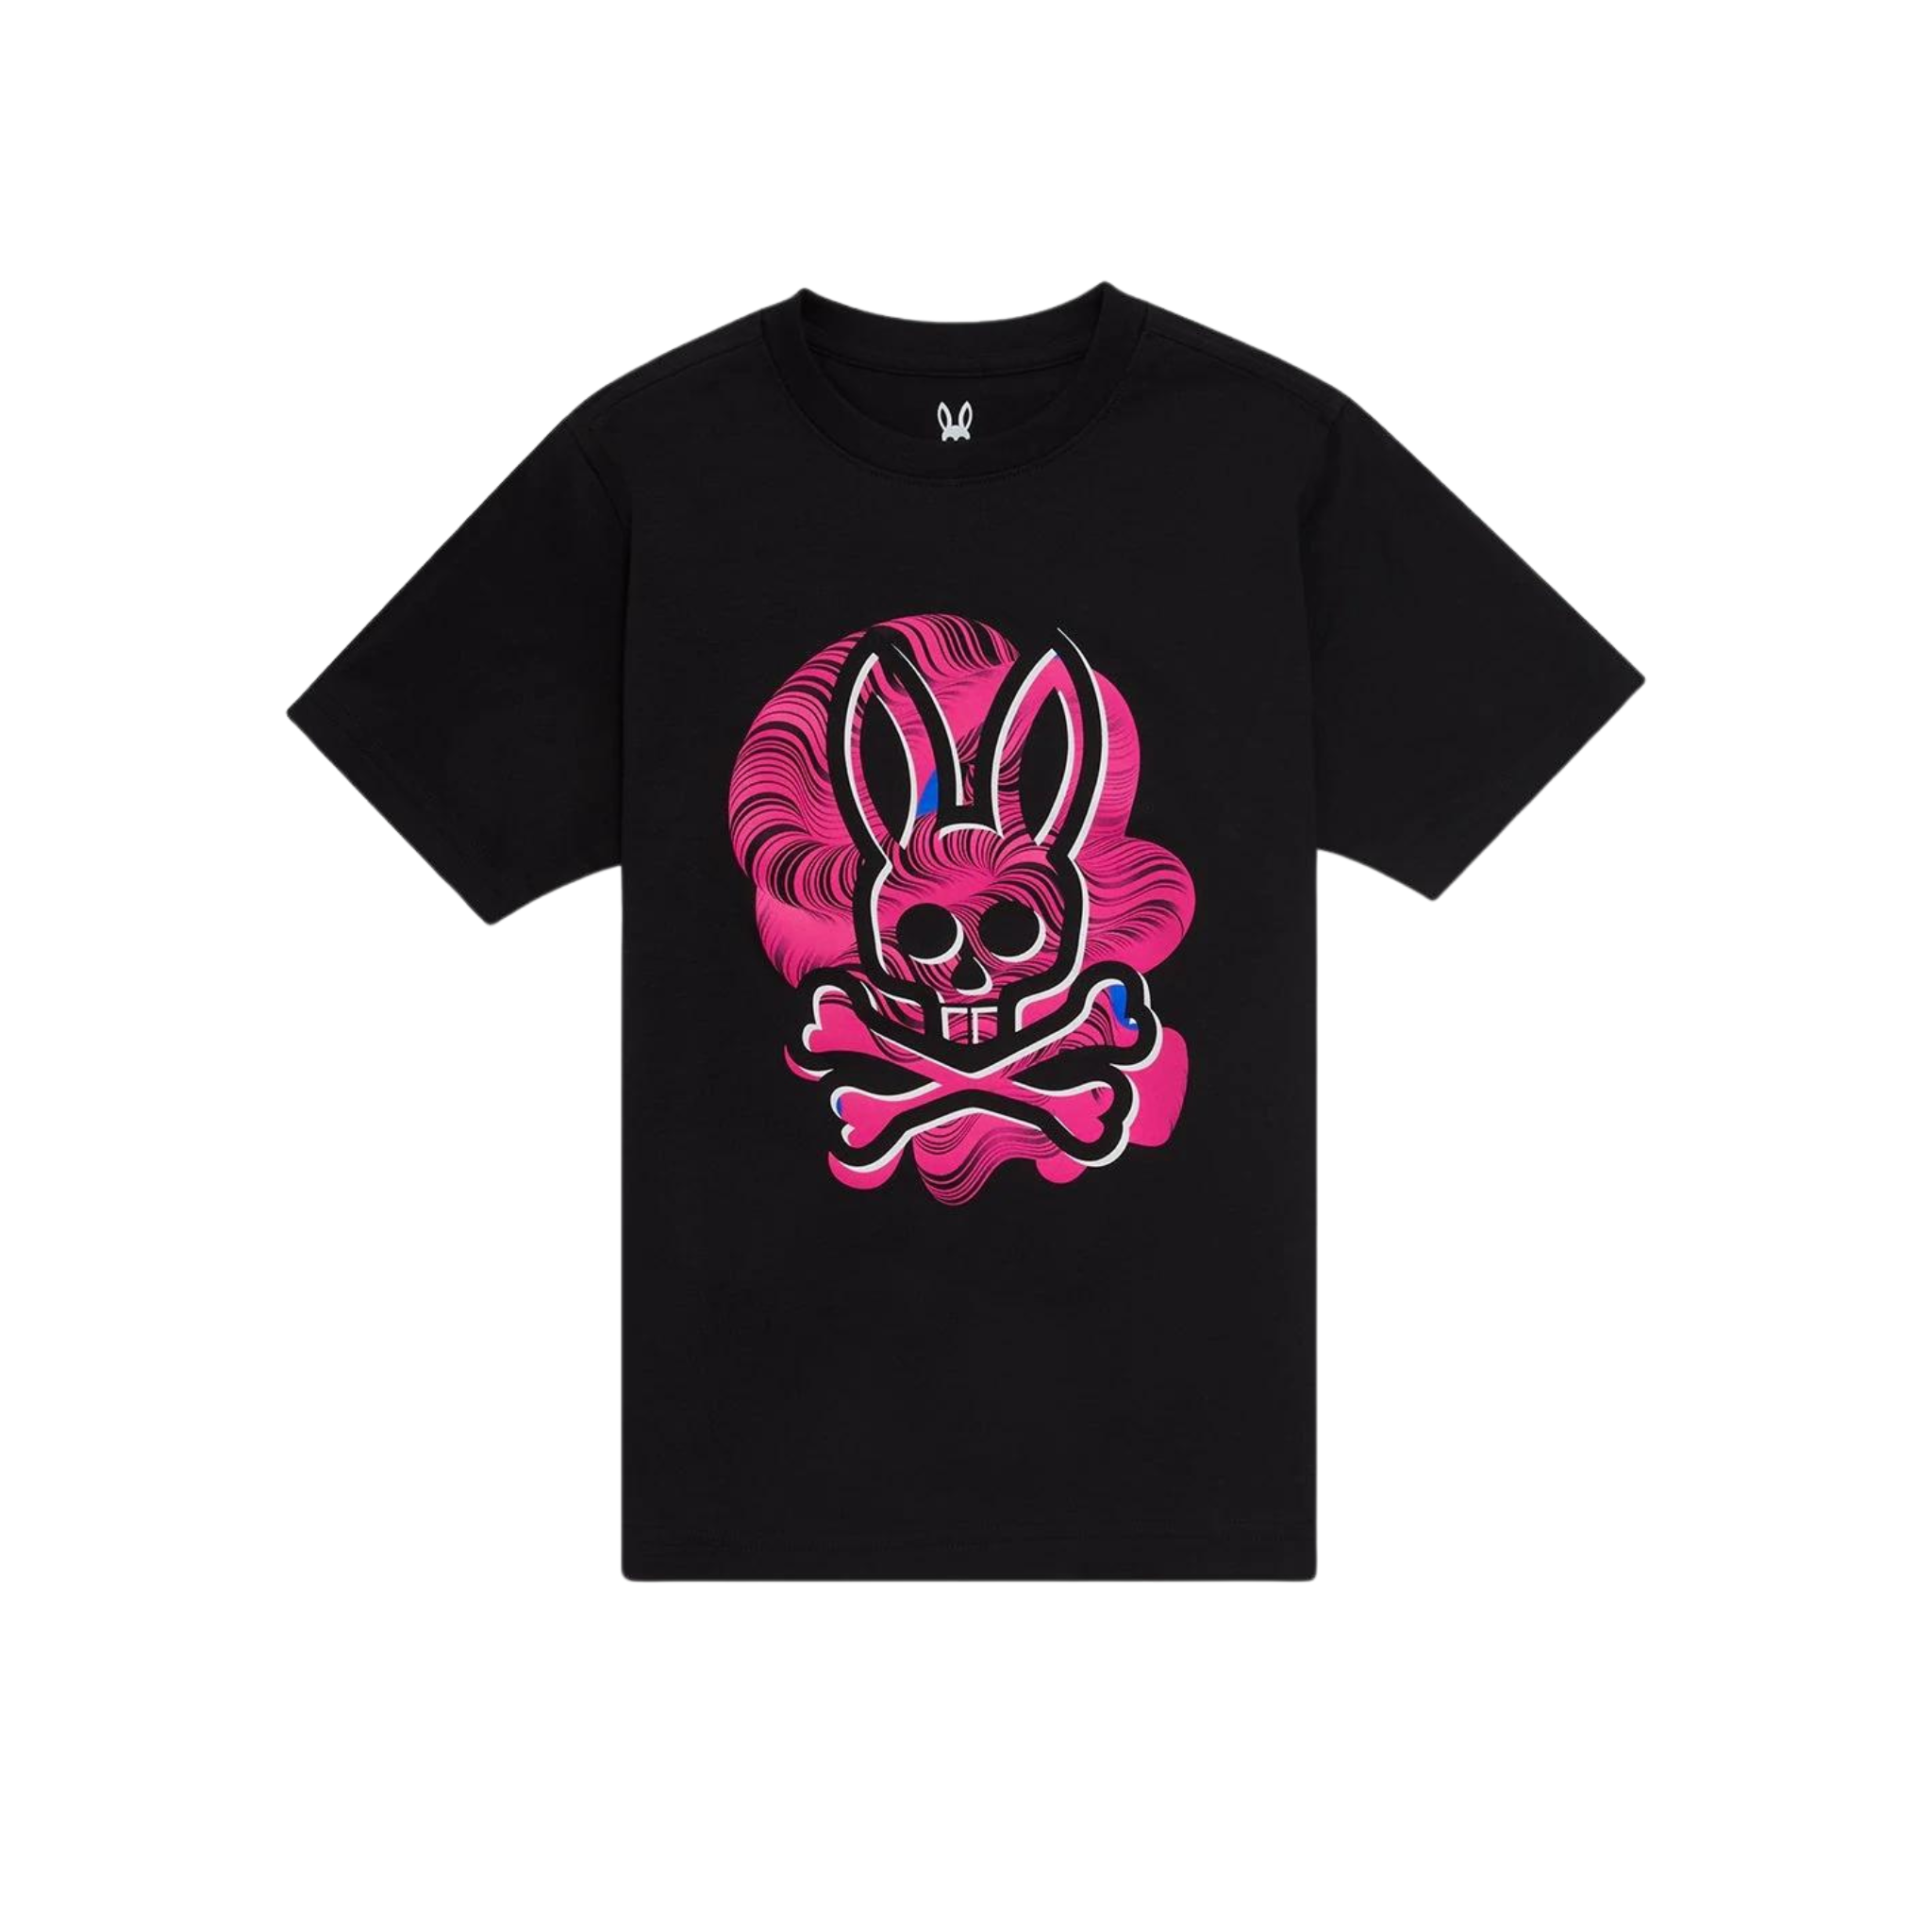 Kids Psycho Bunny Slaytor Graphic Tee (Black) - Psycho Bunny